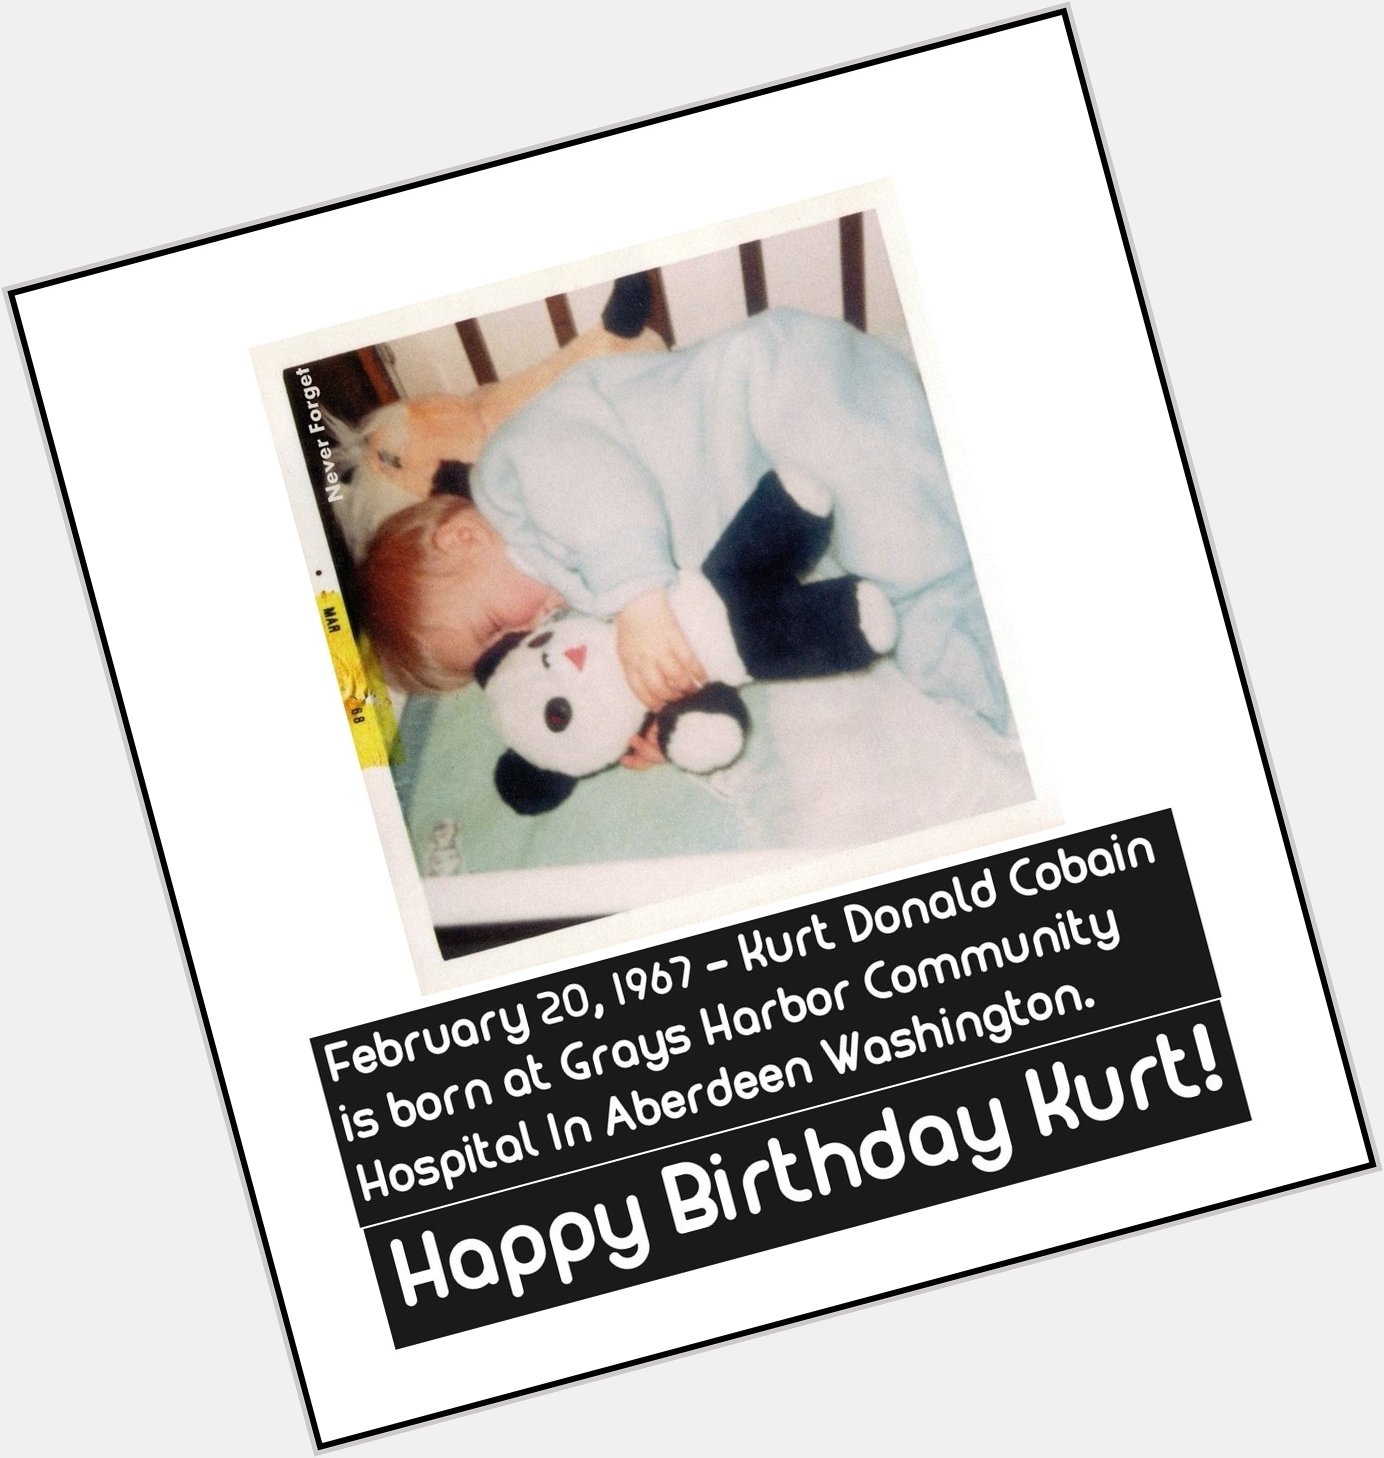 February 20, 1967 Kurt Cobain is born in Aberdeen Washington. Happy Birthday Kurt! 